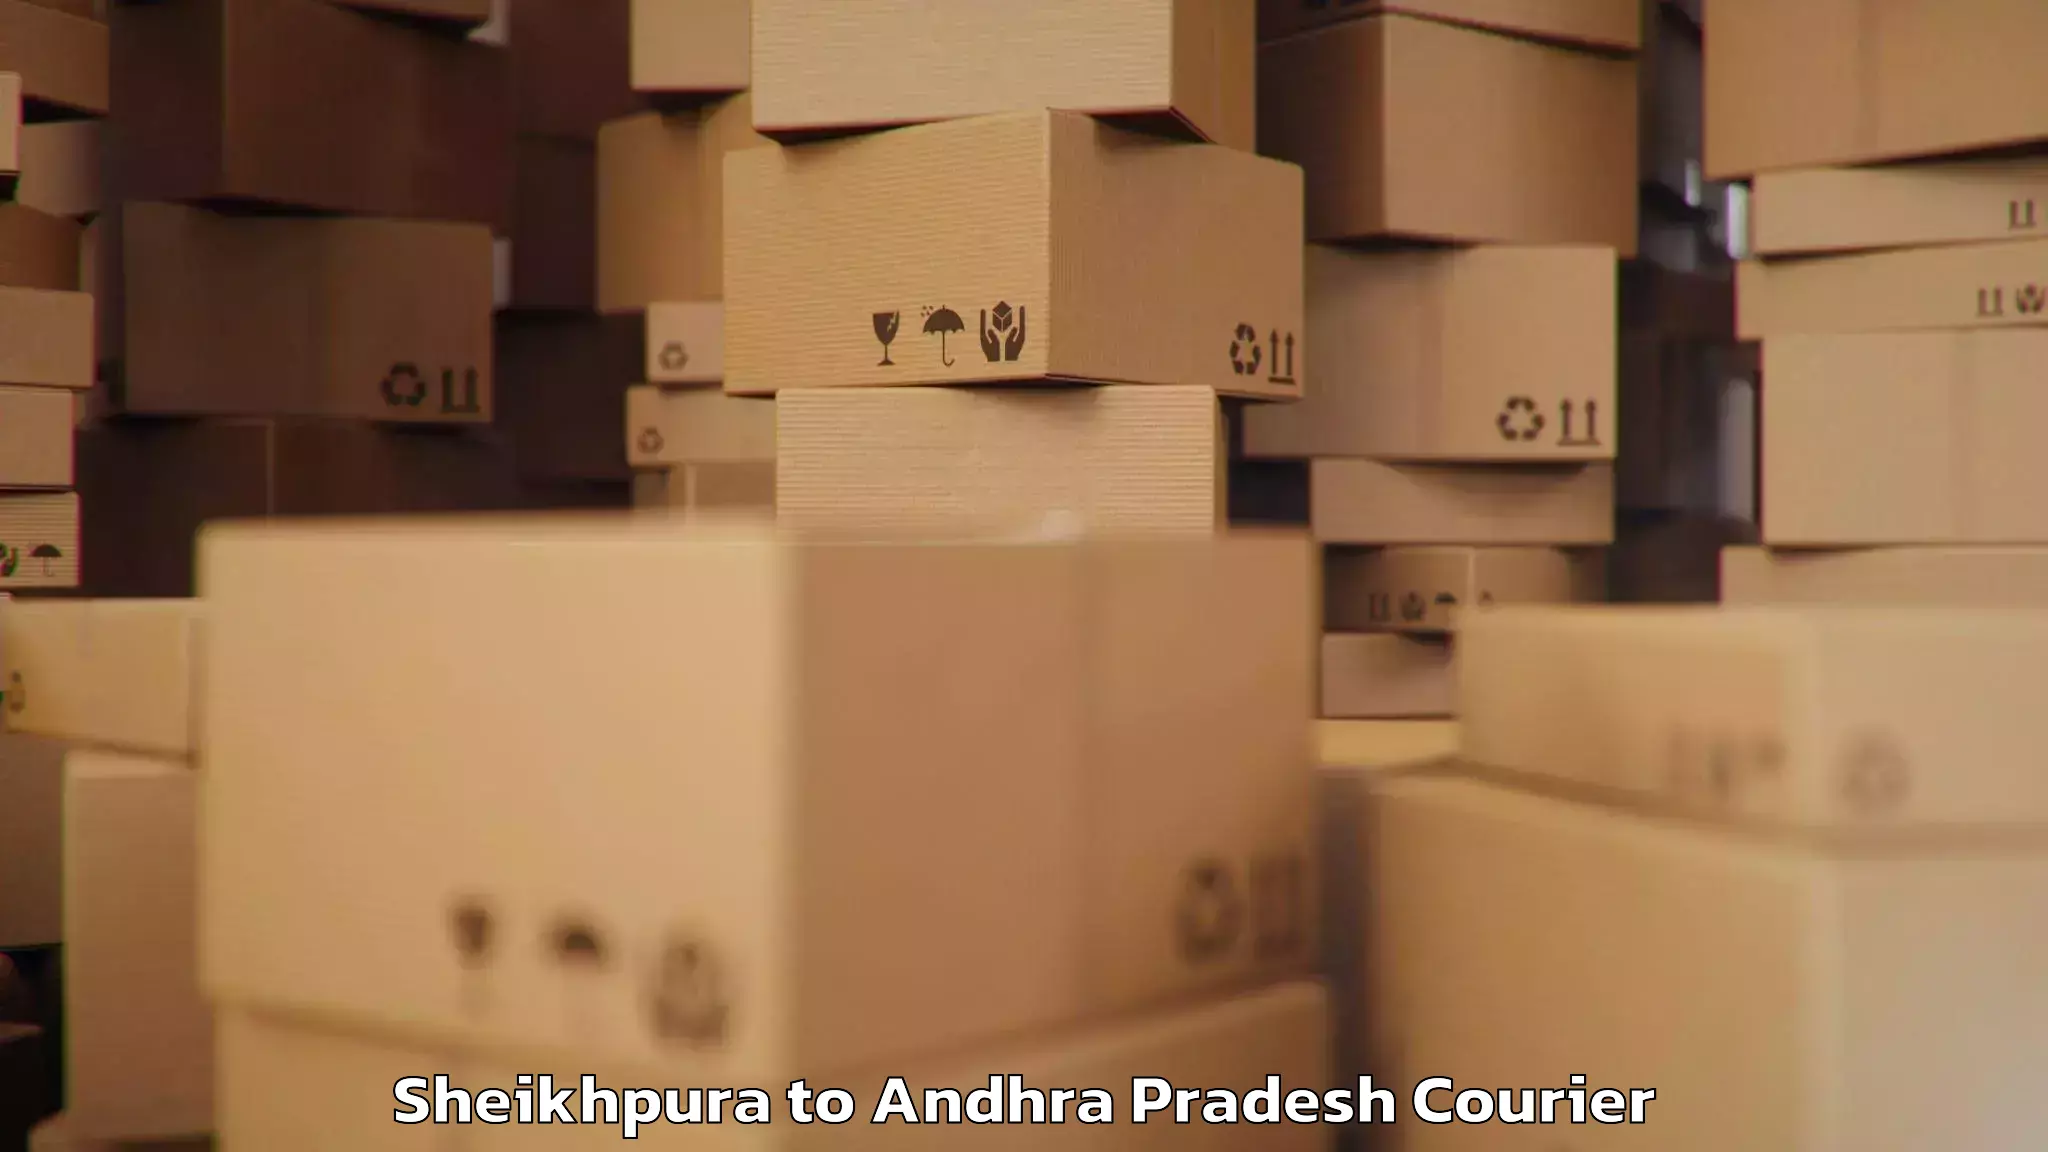 Luggage delivery network Sheikhpura to Tirupati